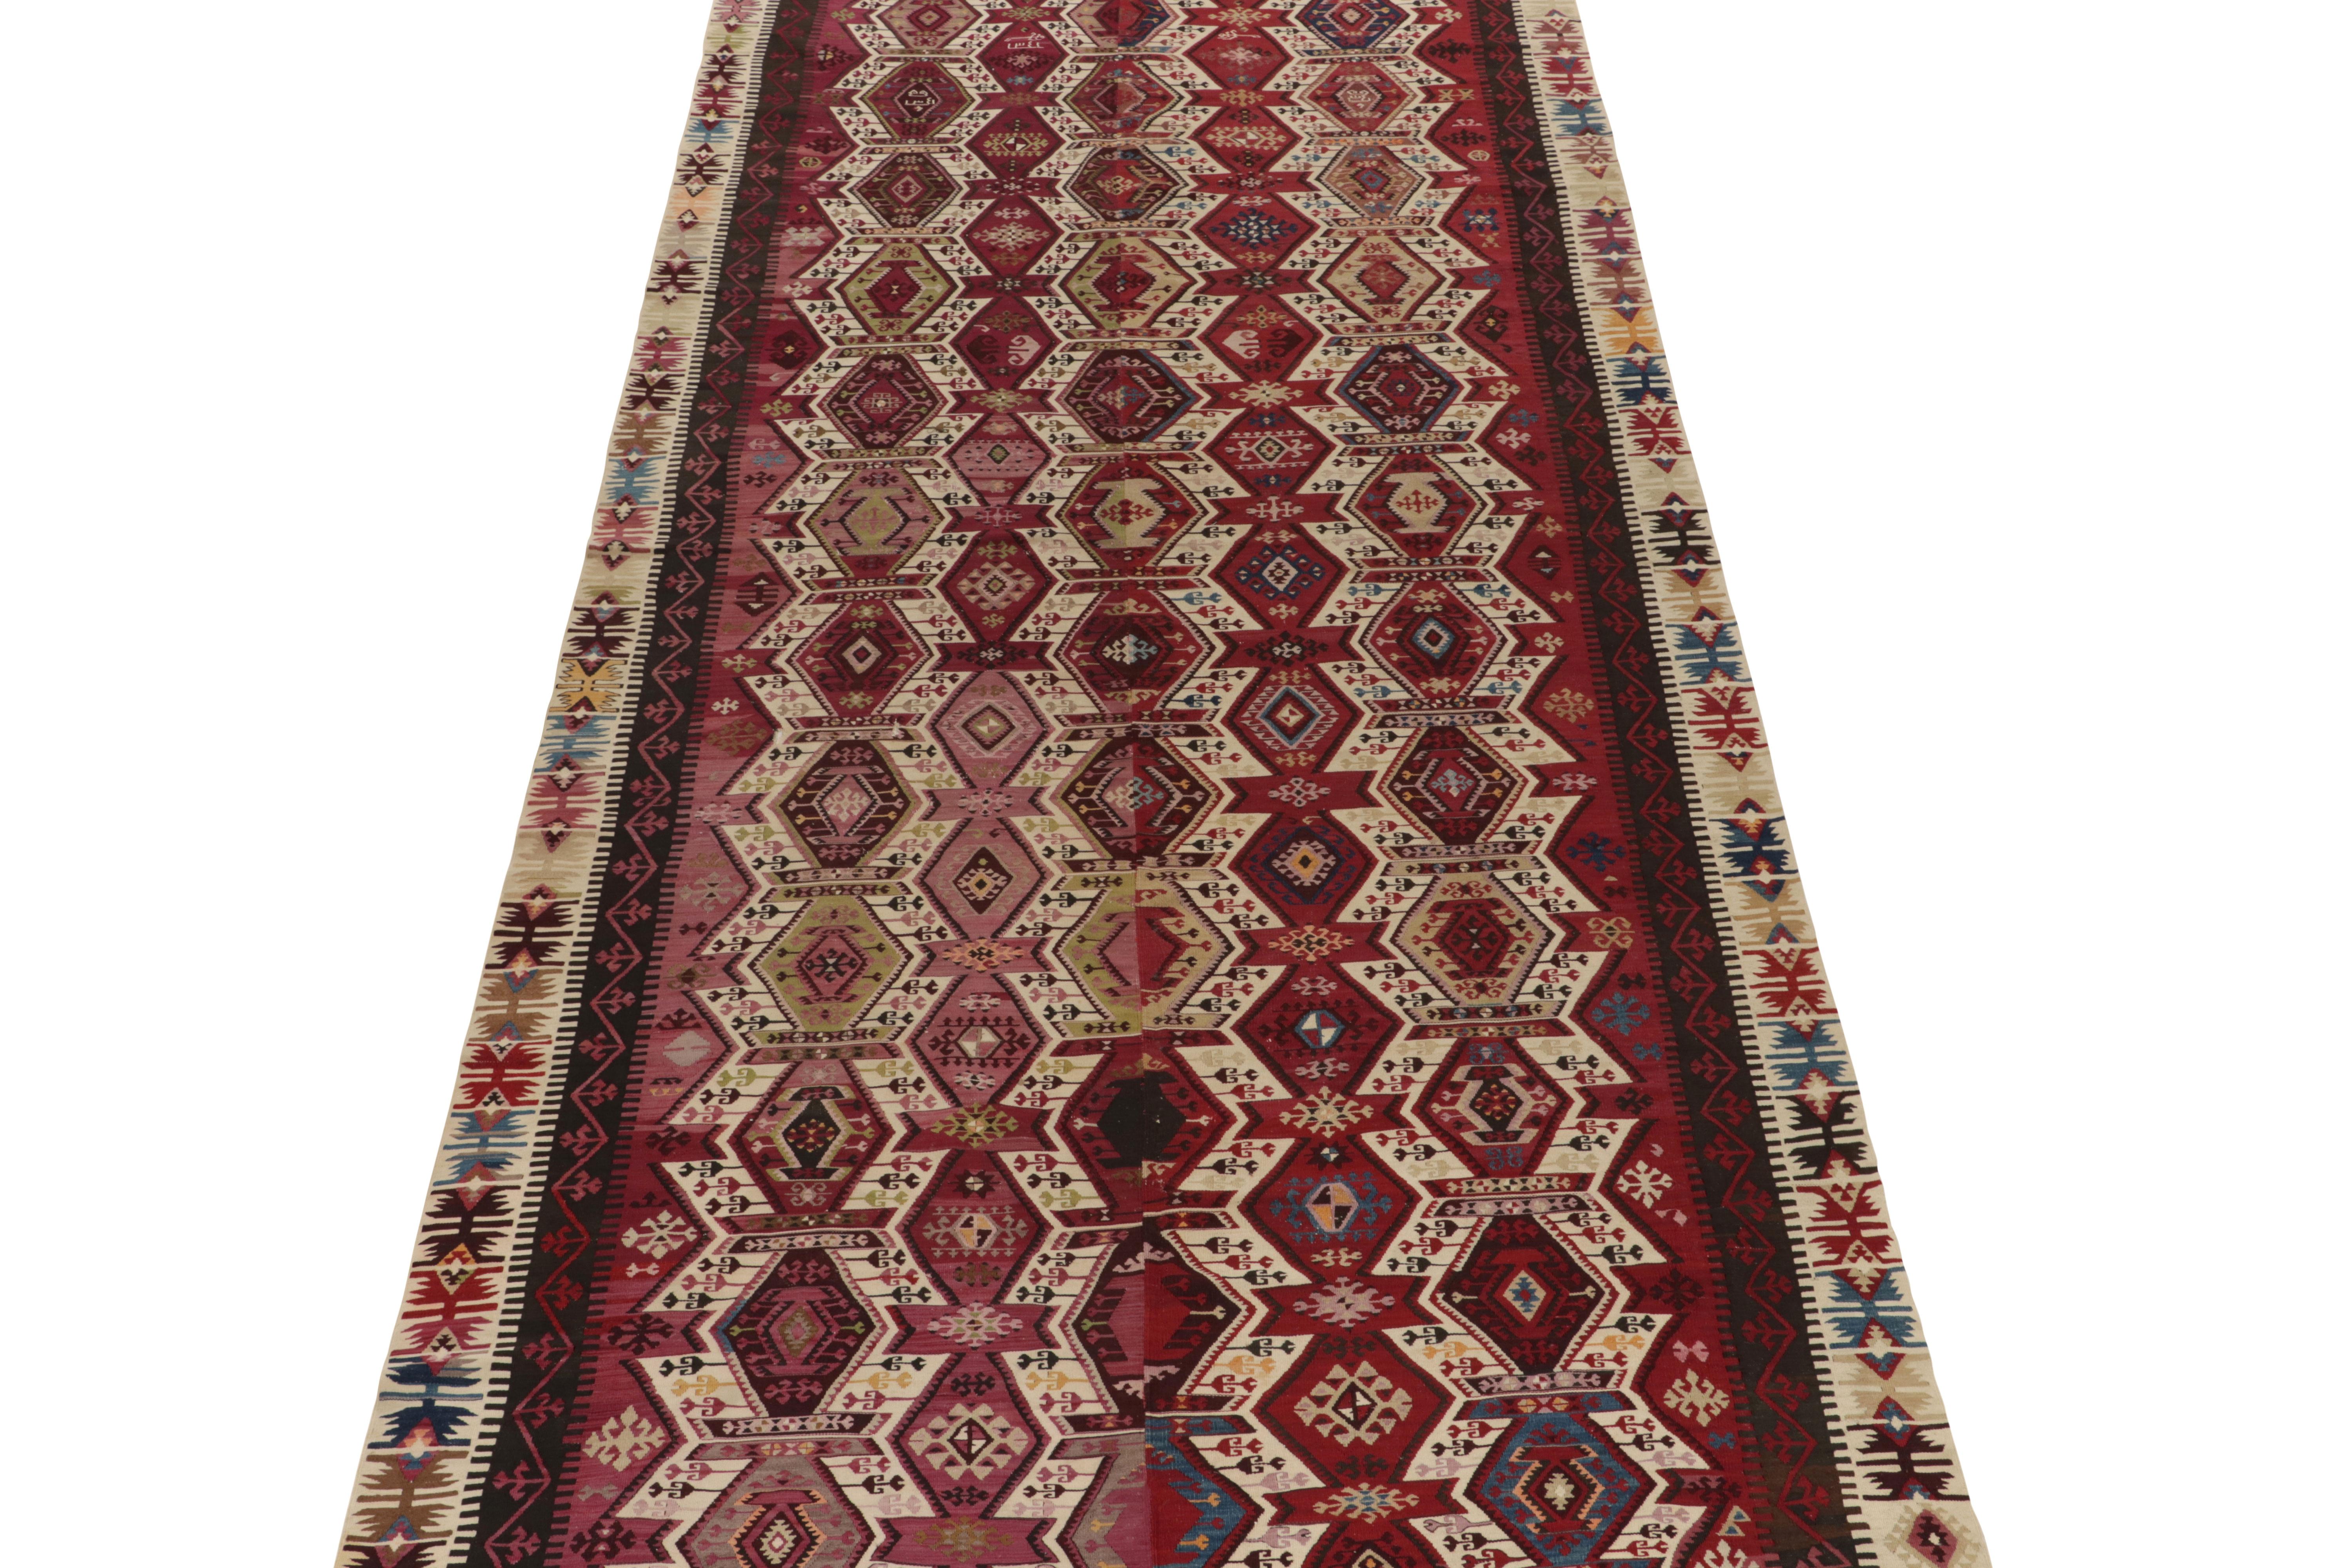 Turkish Antique Kilim Rug in Red, Brown, Beige Tribal Geometric Pattern by Rug & Kilim For Sale